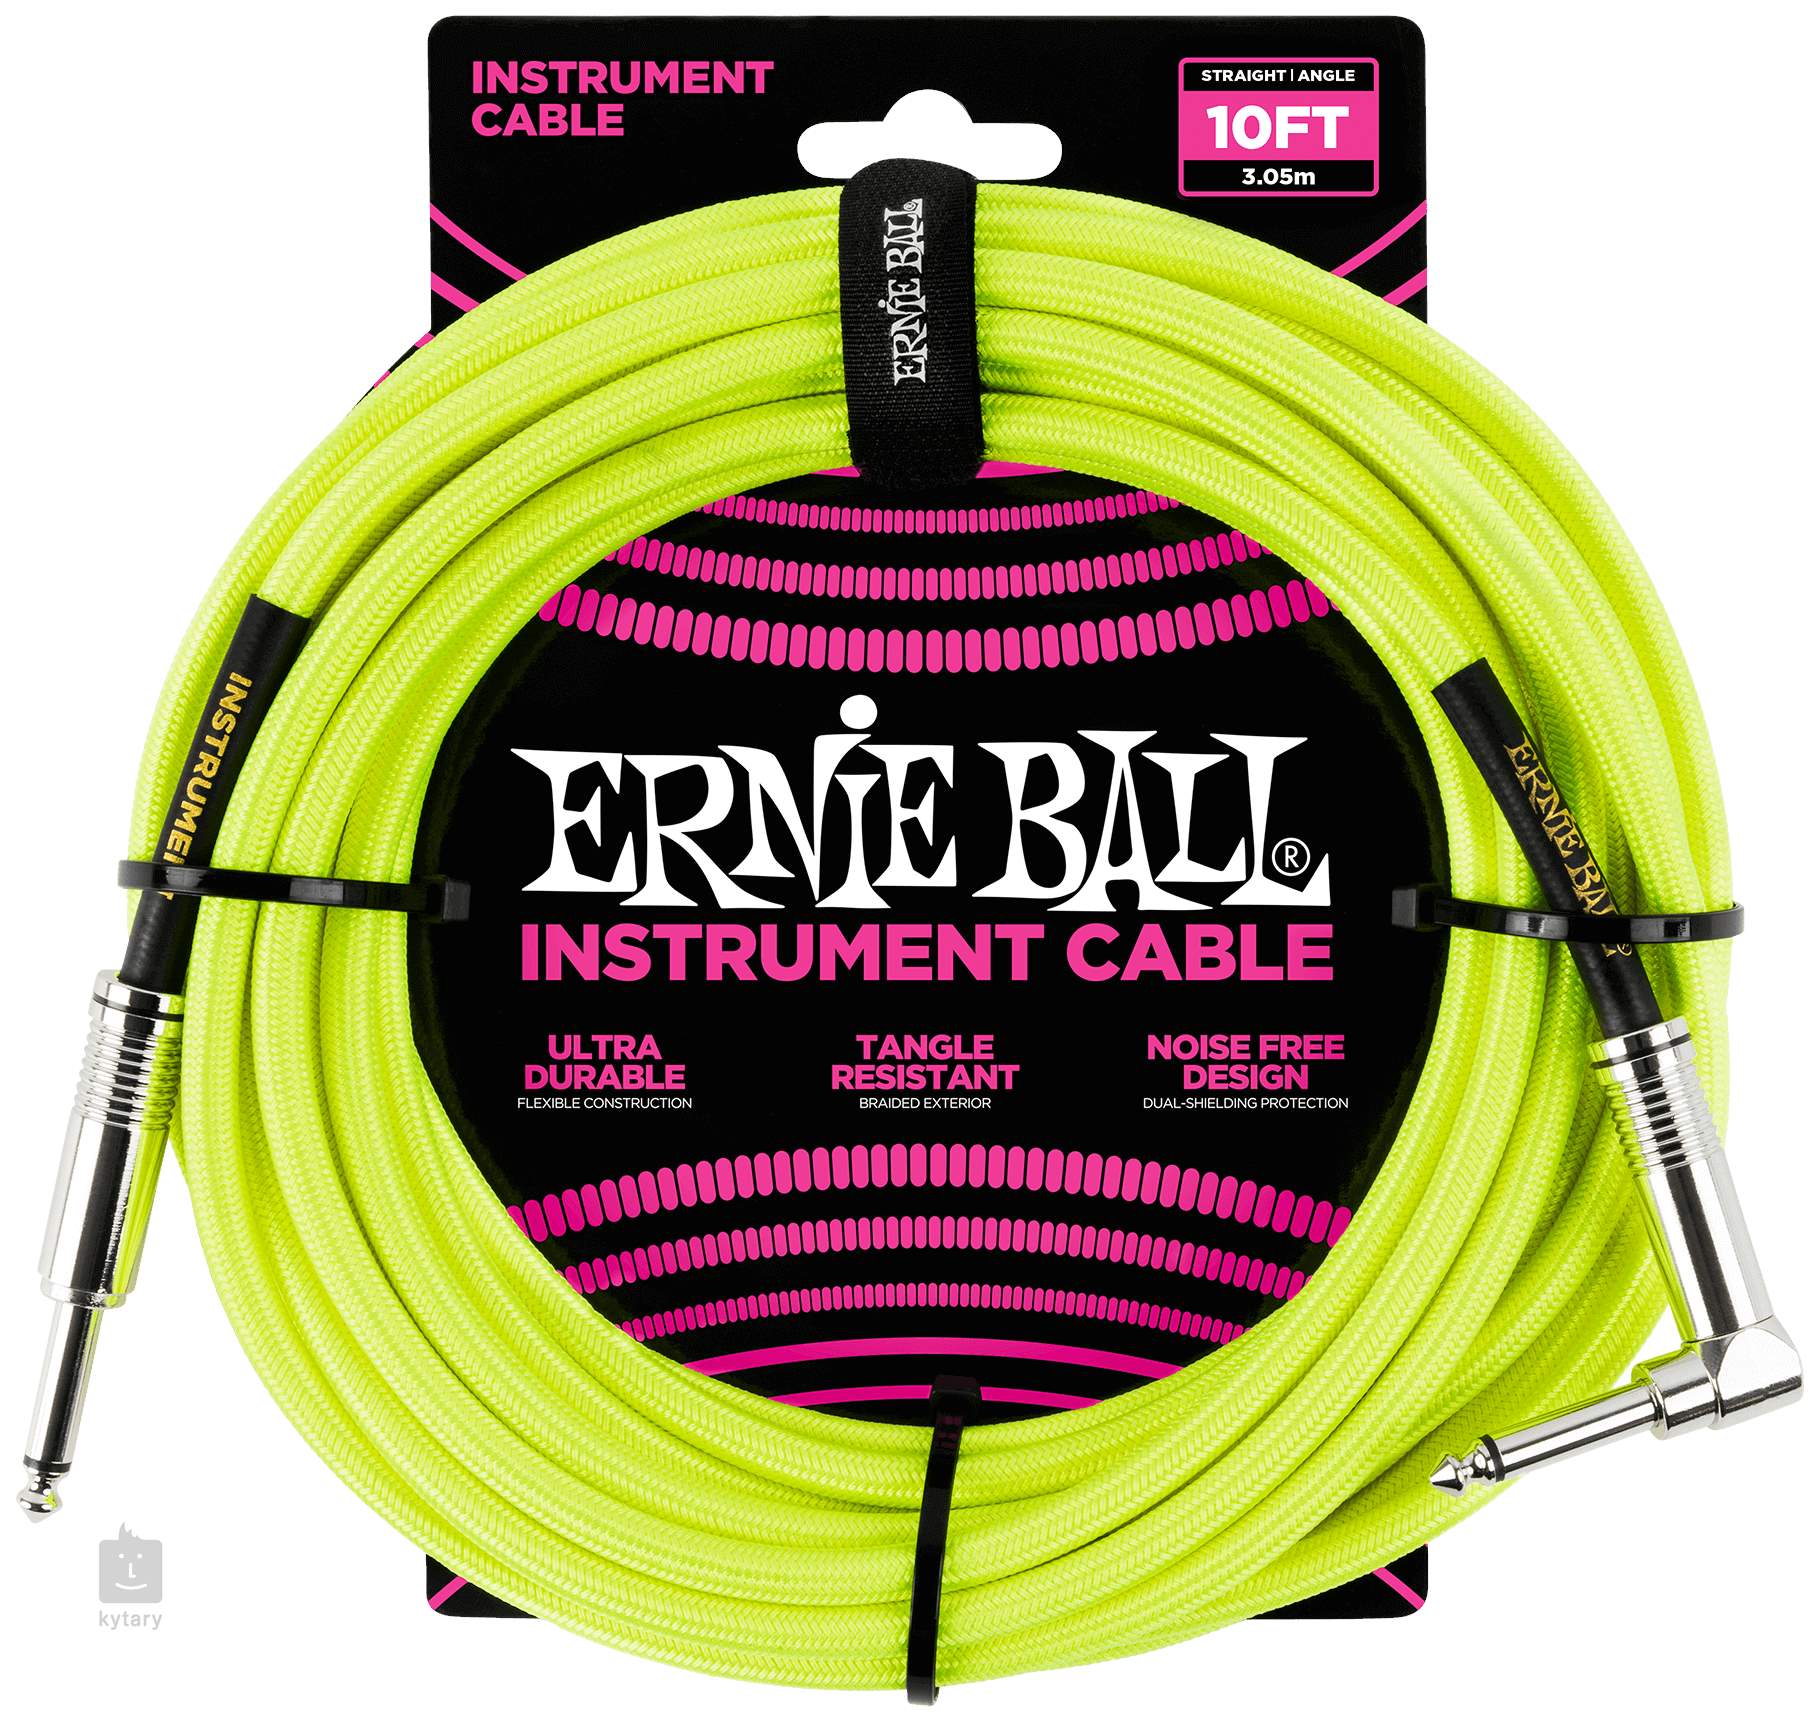 Beschuldiging begroting slaap ERNIE BALL 10' Braided Cable Neon Yellow Instrumentenkabel